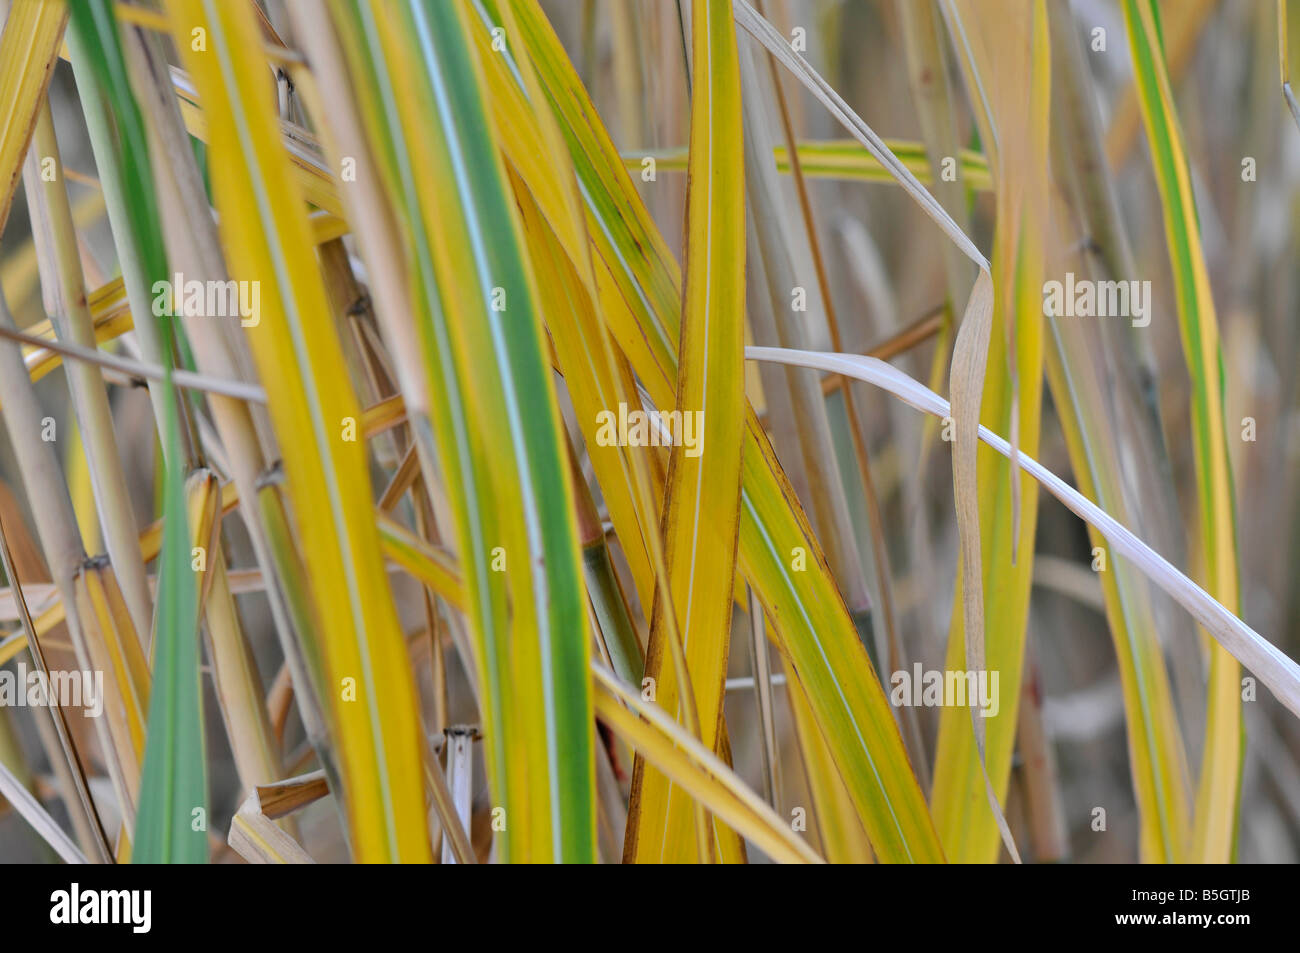 Amur silver grass. Botanical name is Miscanthus sacchariflorus Stock Photo